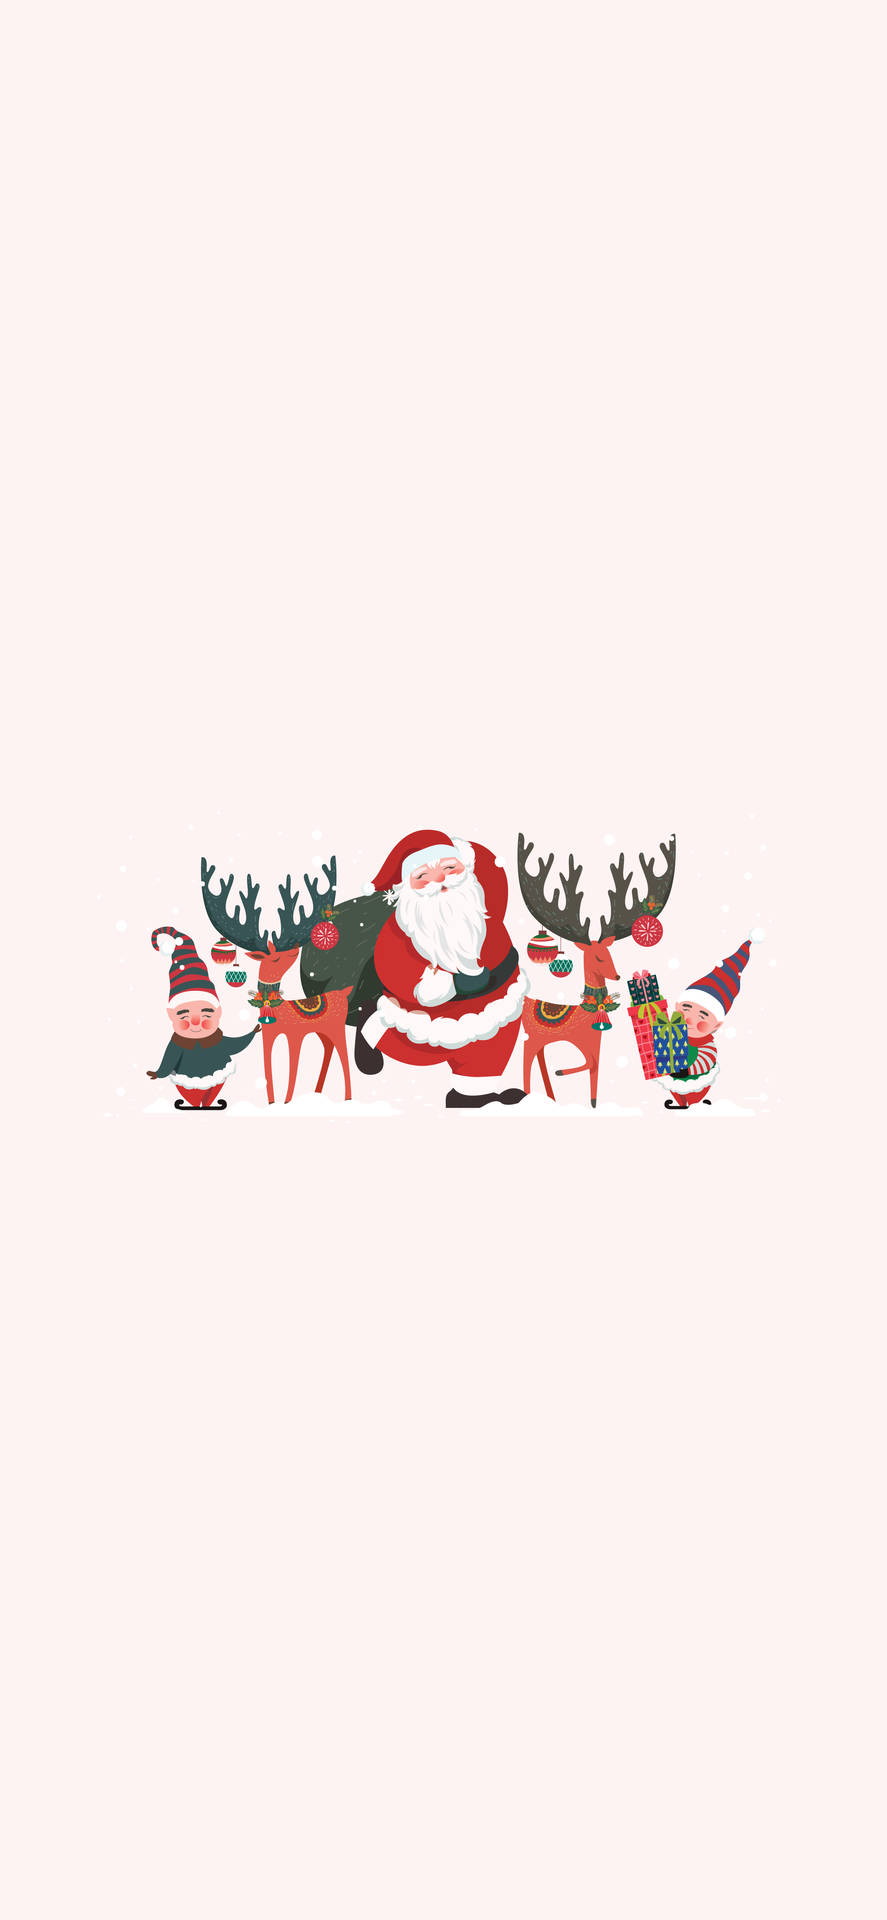 40+ Preppy Christmas Wallpaper Ideas : Christmas Letters & Cute